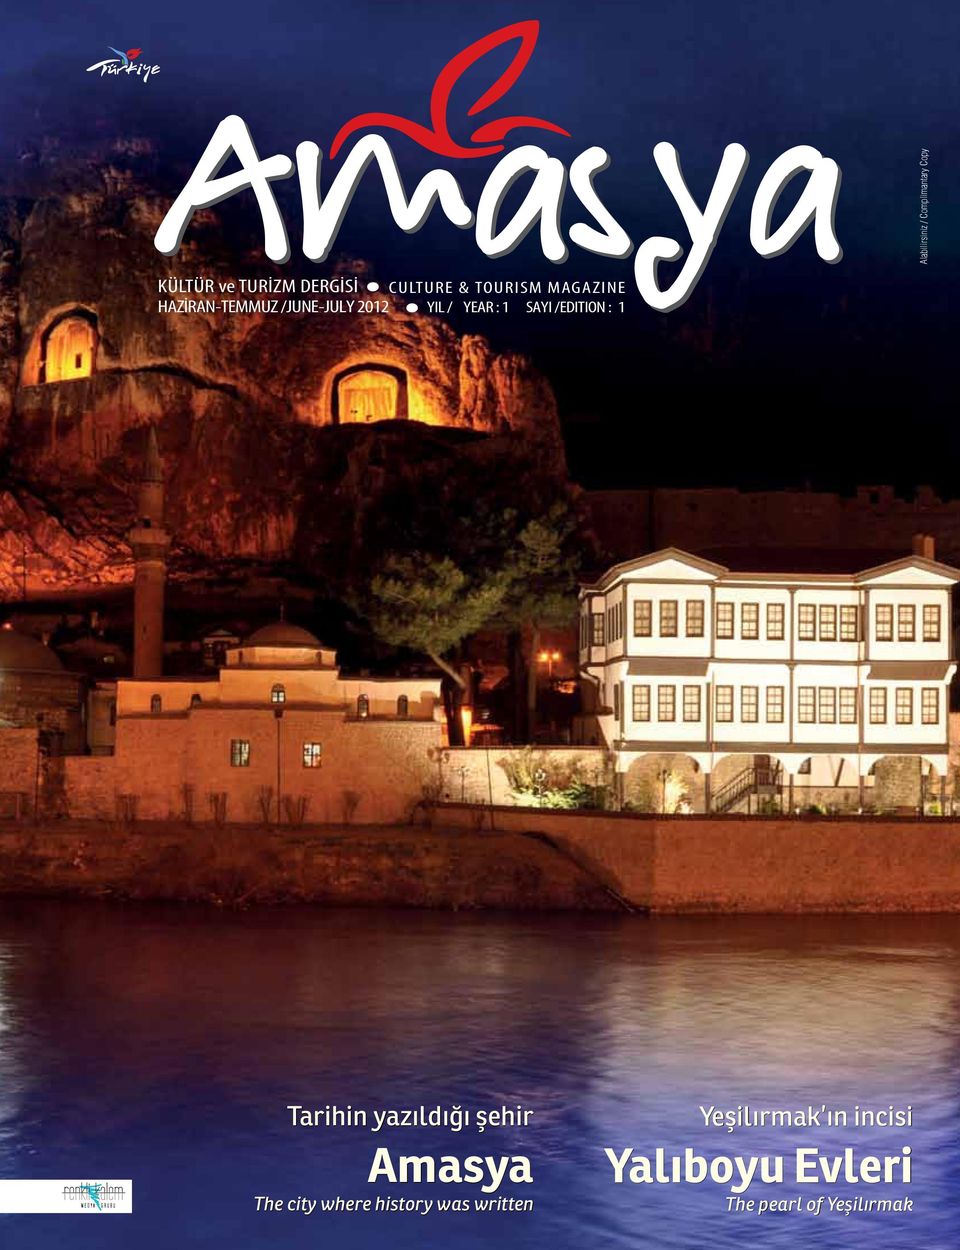 /EDITION : 1 Tarihin yazıldığı şehir Amasya The city where history